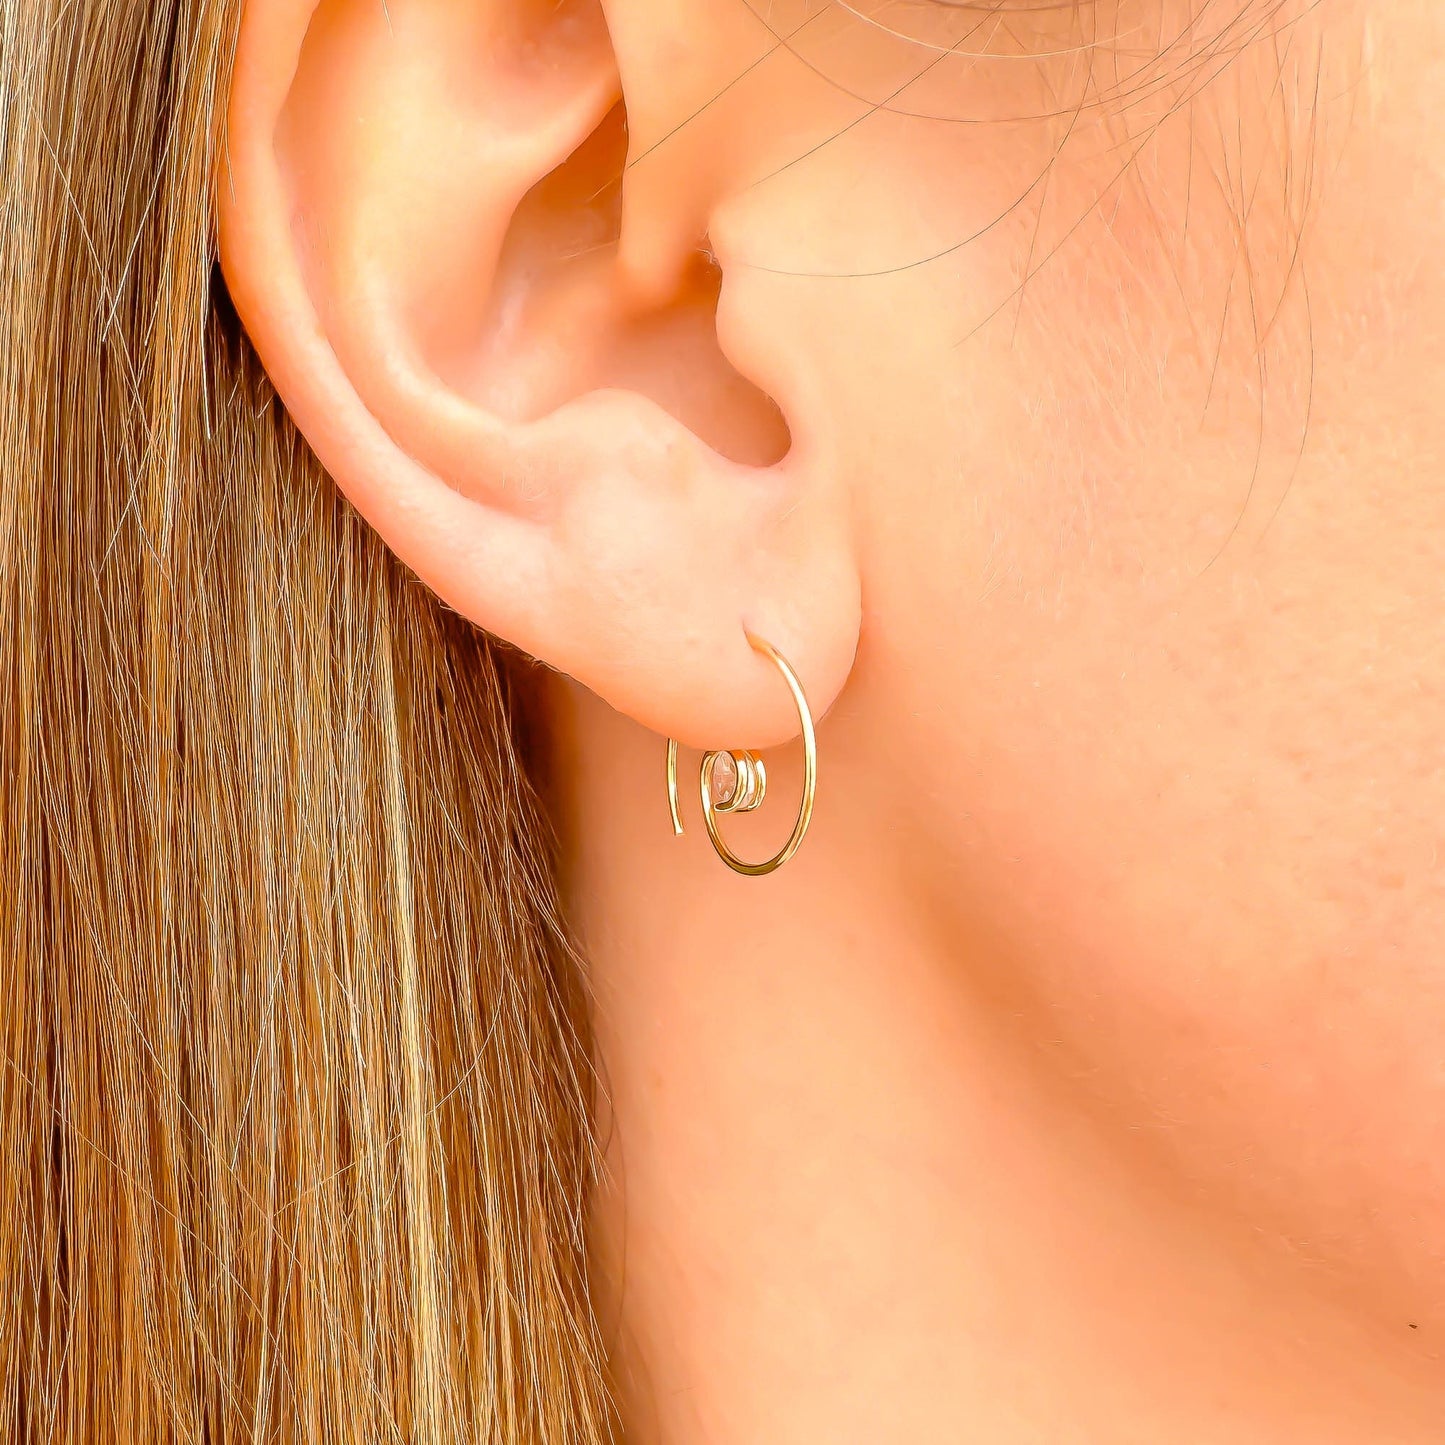 CZ Spiral Hoop Earrings, 14K Gold Filled